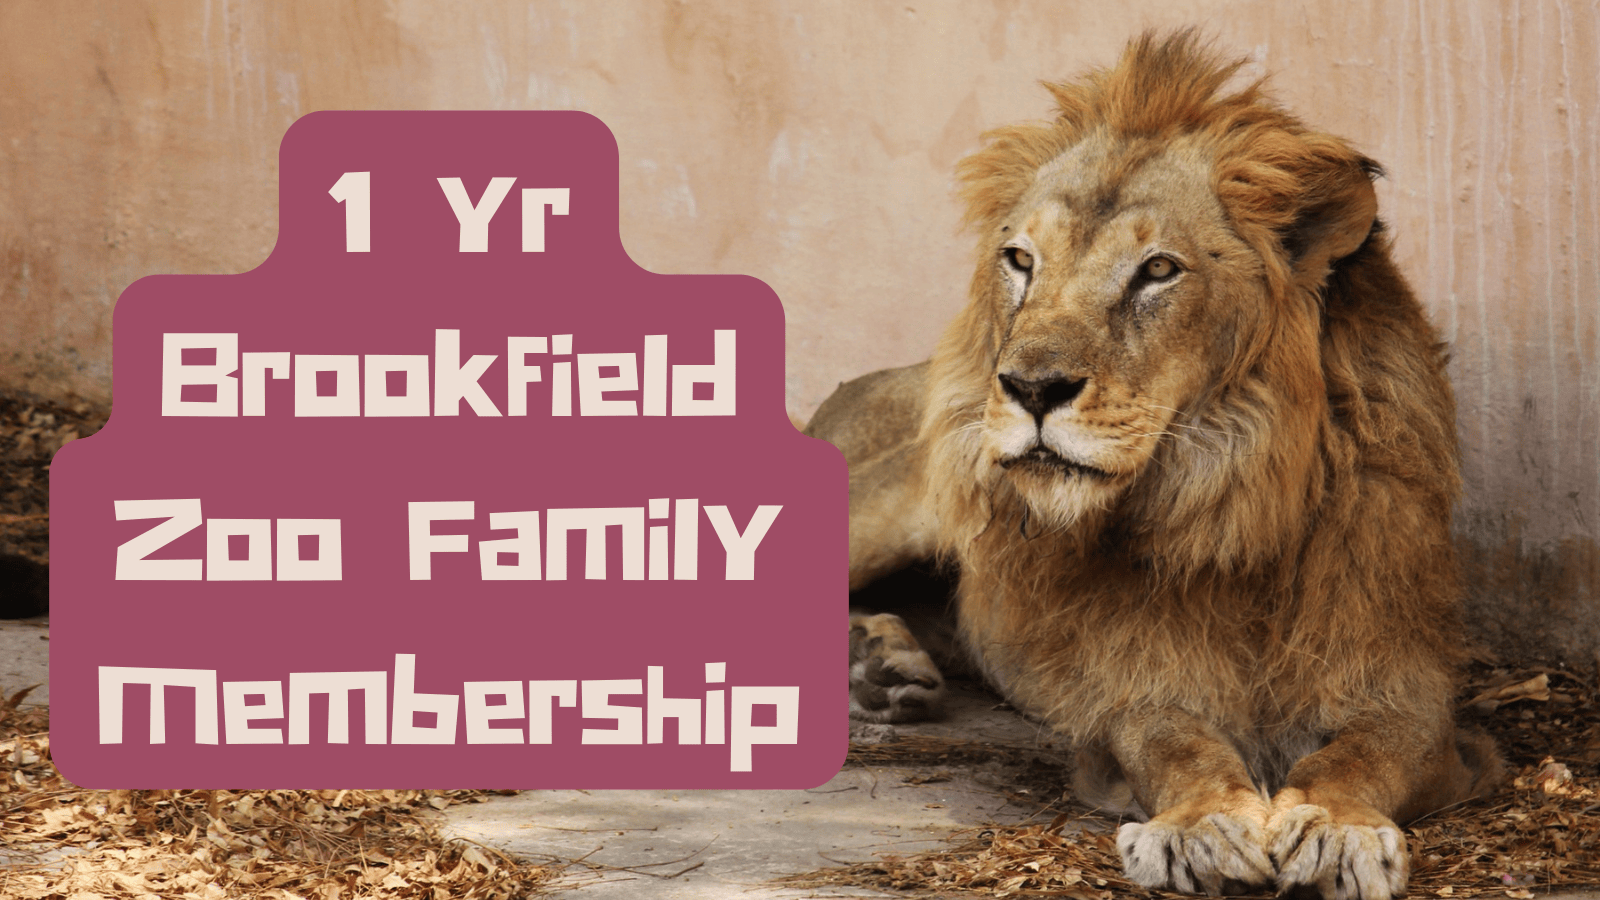 1 year Brookfield Zoo Family Membership